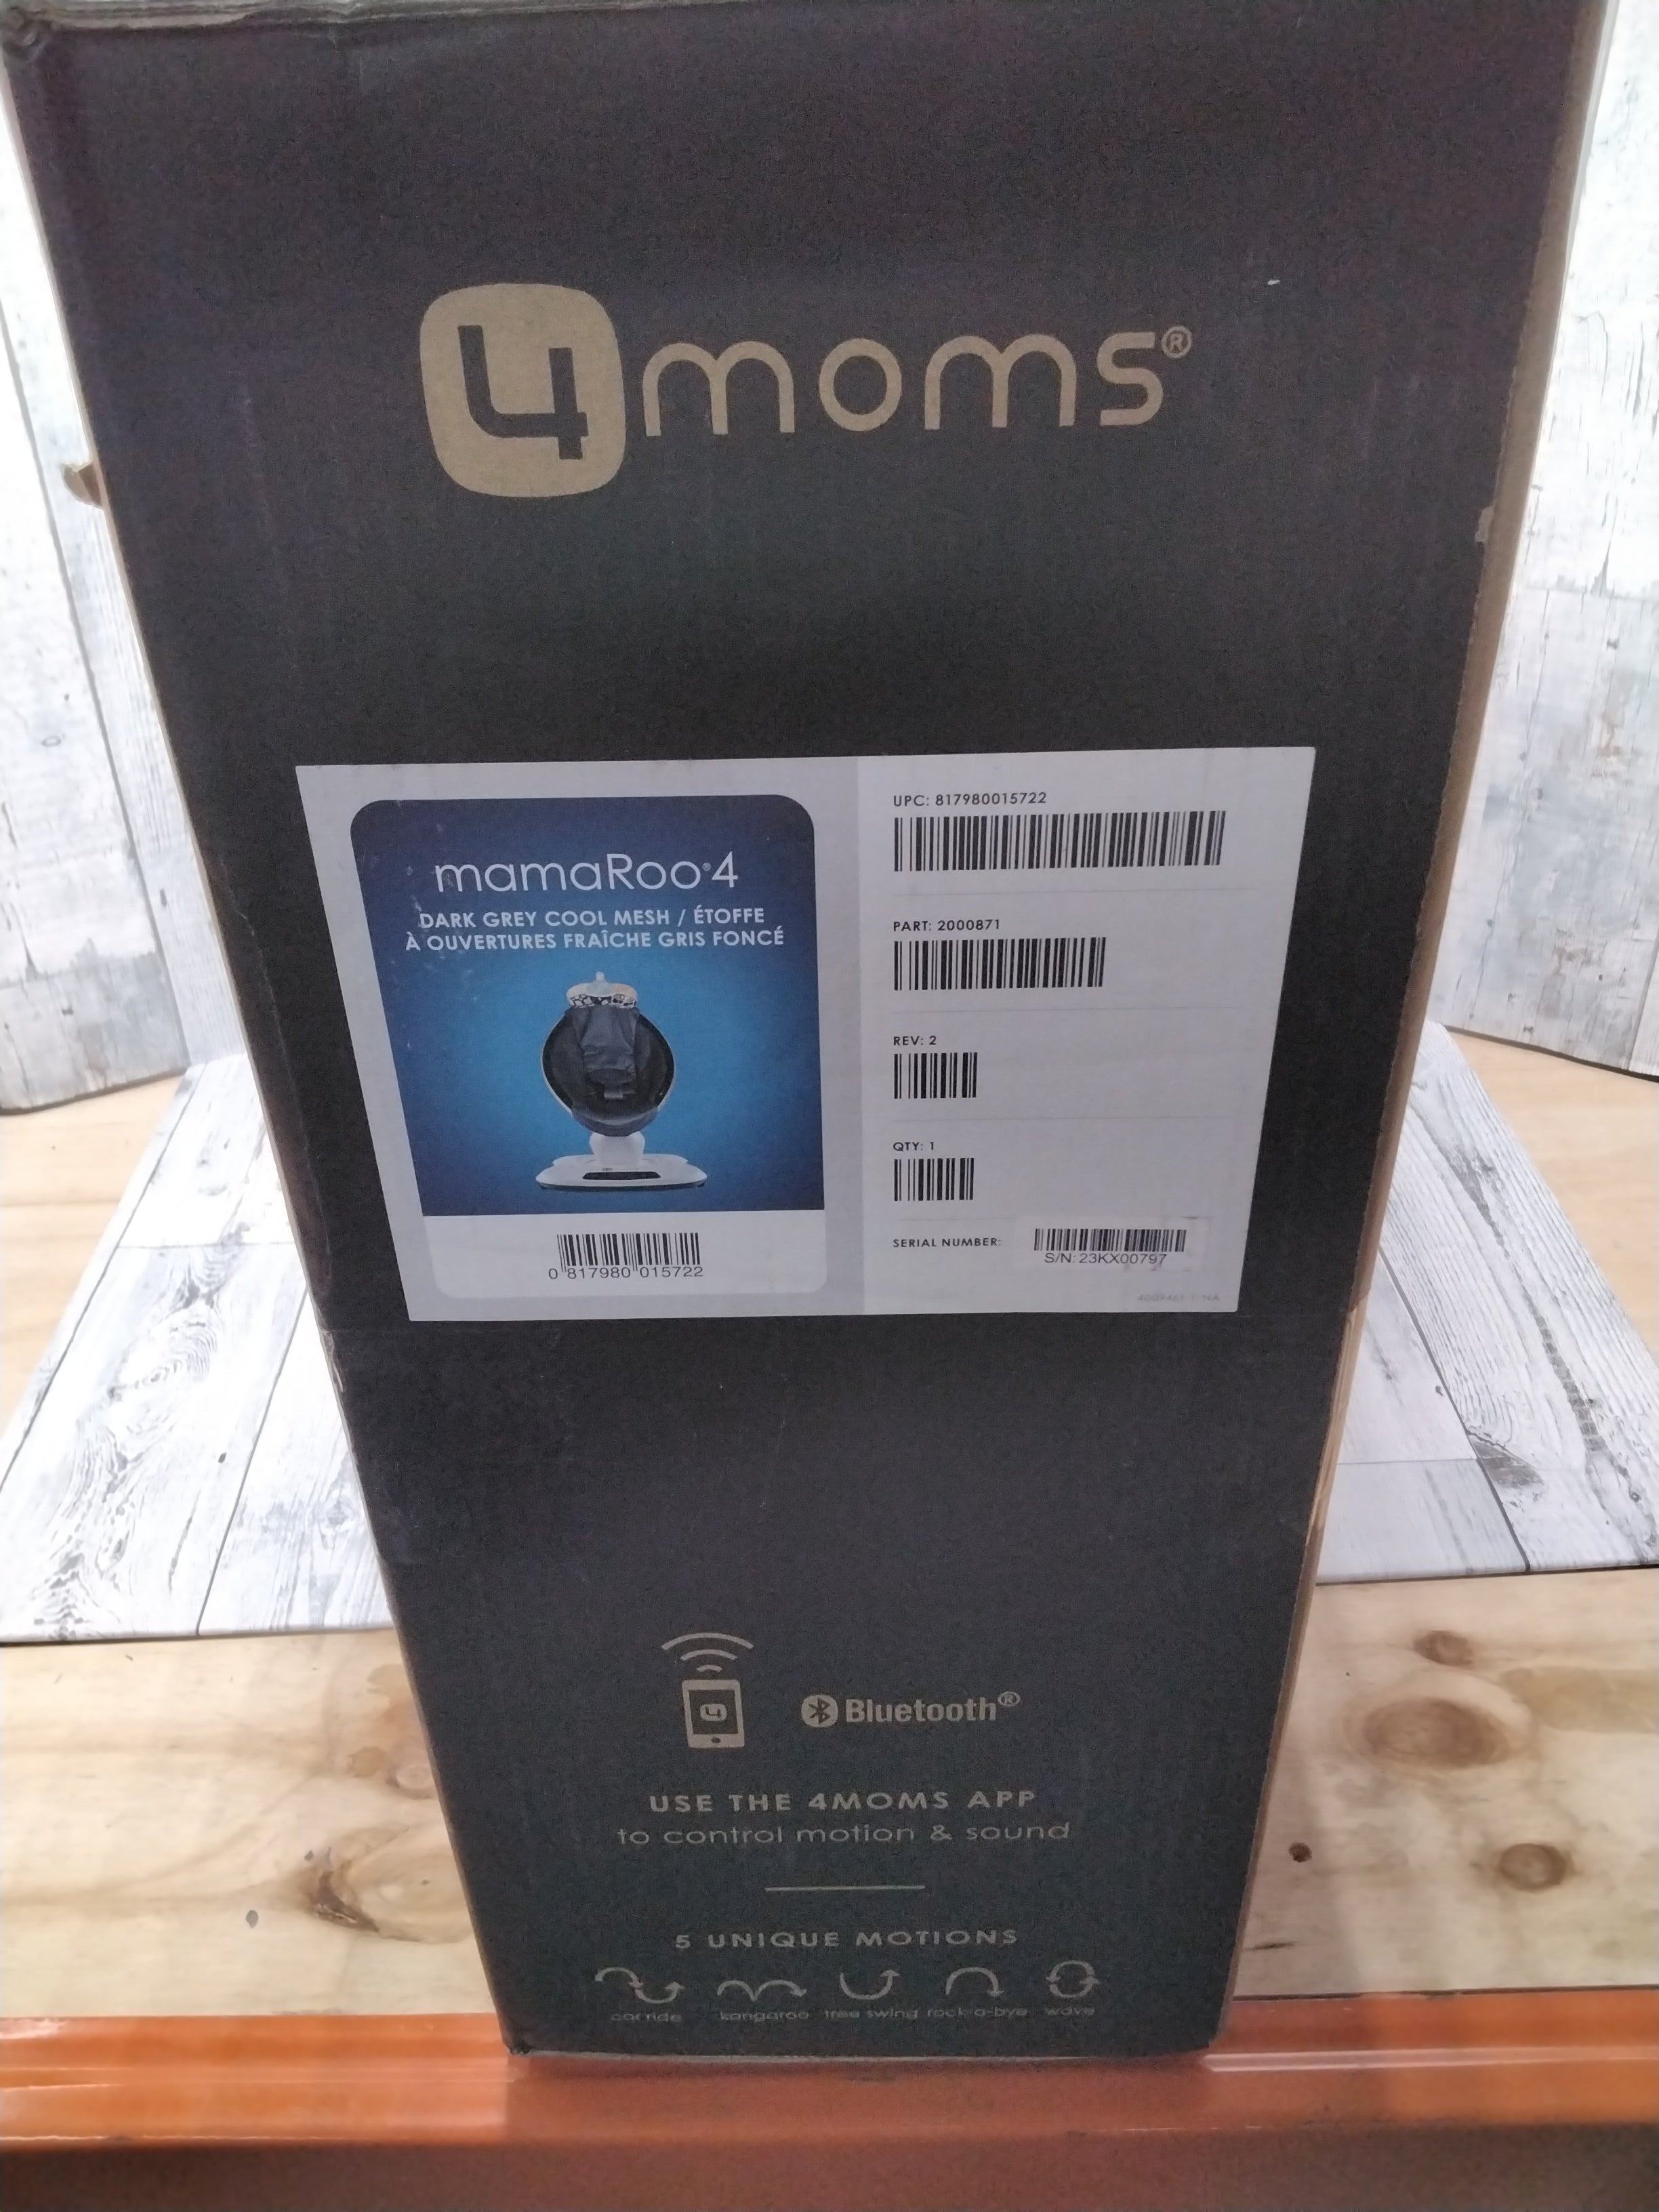 4moms mamaRoo 4 Multi-Motion Baby Swing, Bluetooth Baby Rocker, 5 Unique Motions (7845379932398)